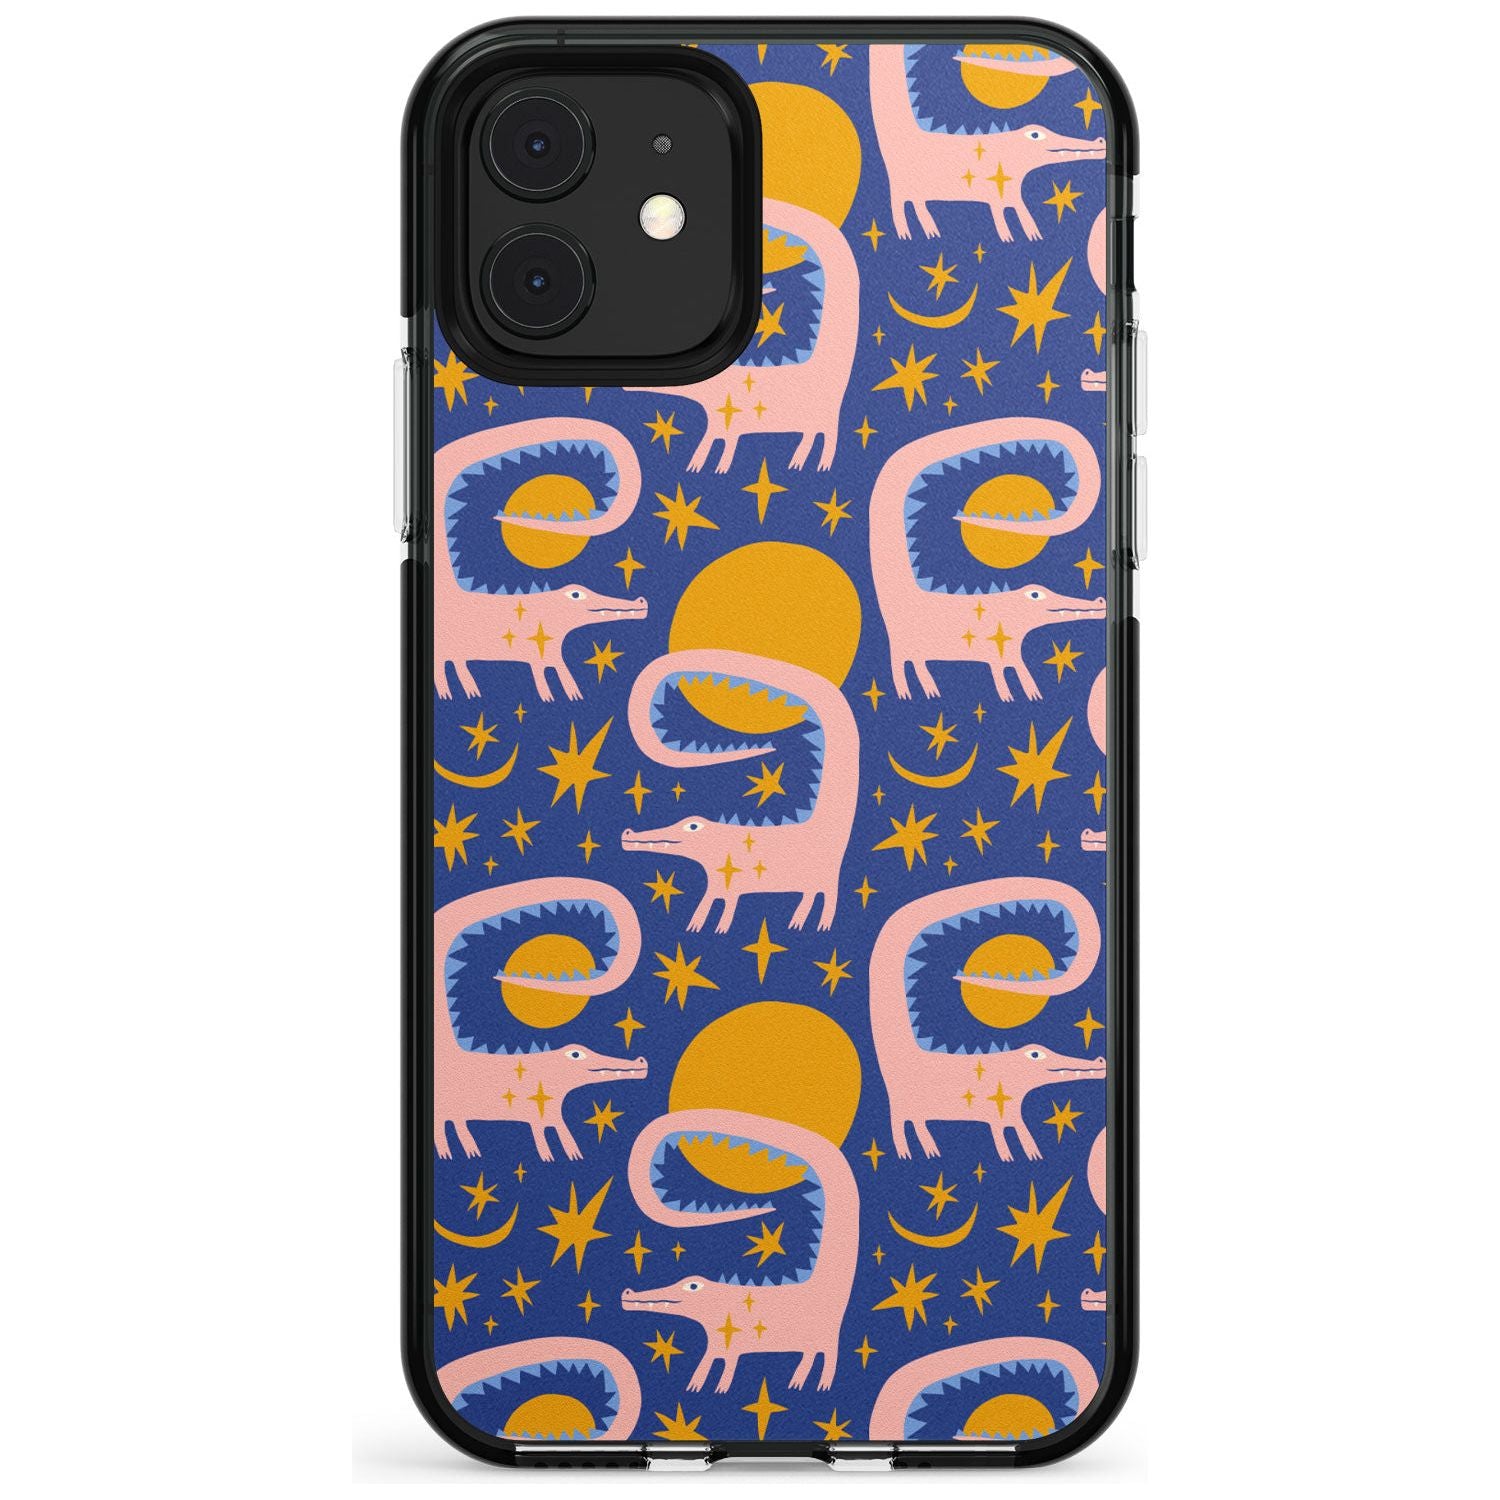 Sun Croc Pattern Black Impact Phone Case for iPhone 11 Pro Max